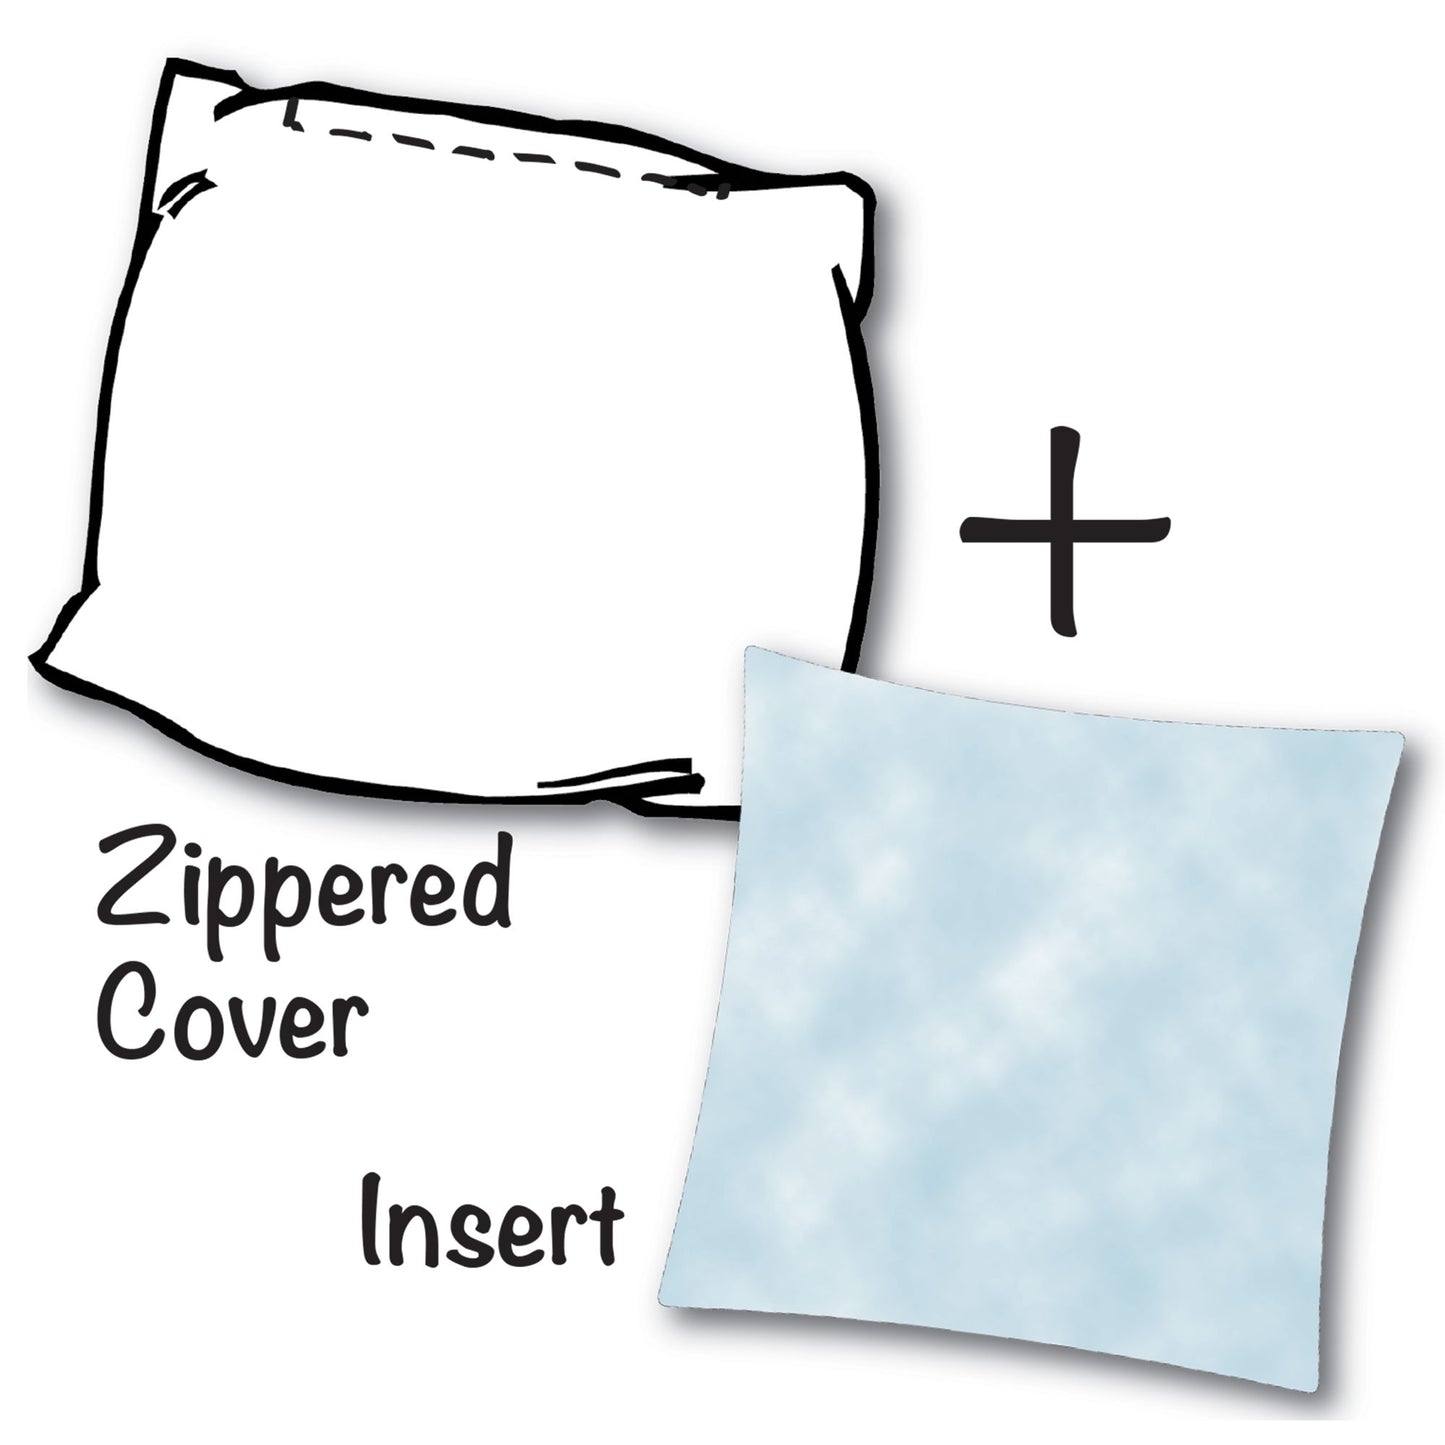 17" X 17" Indigo And Cream Zippered Ikat Throw Indoor Outdoor Pillow